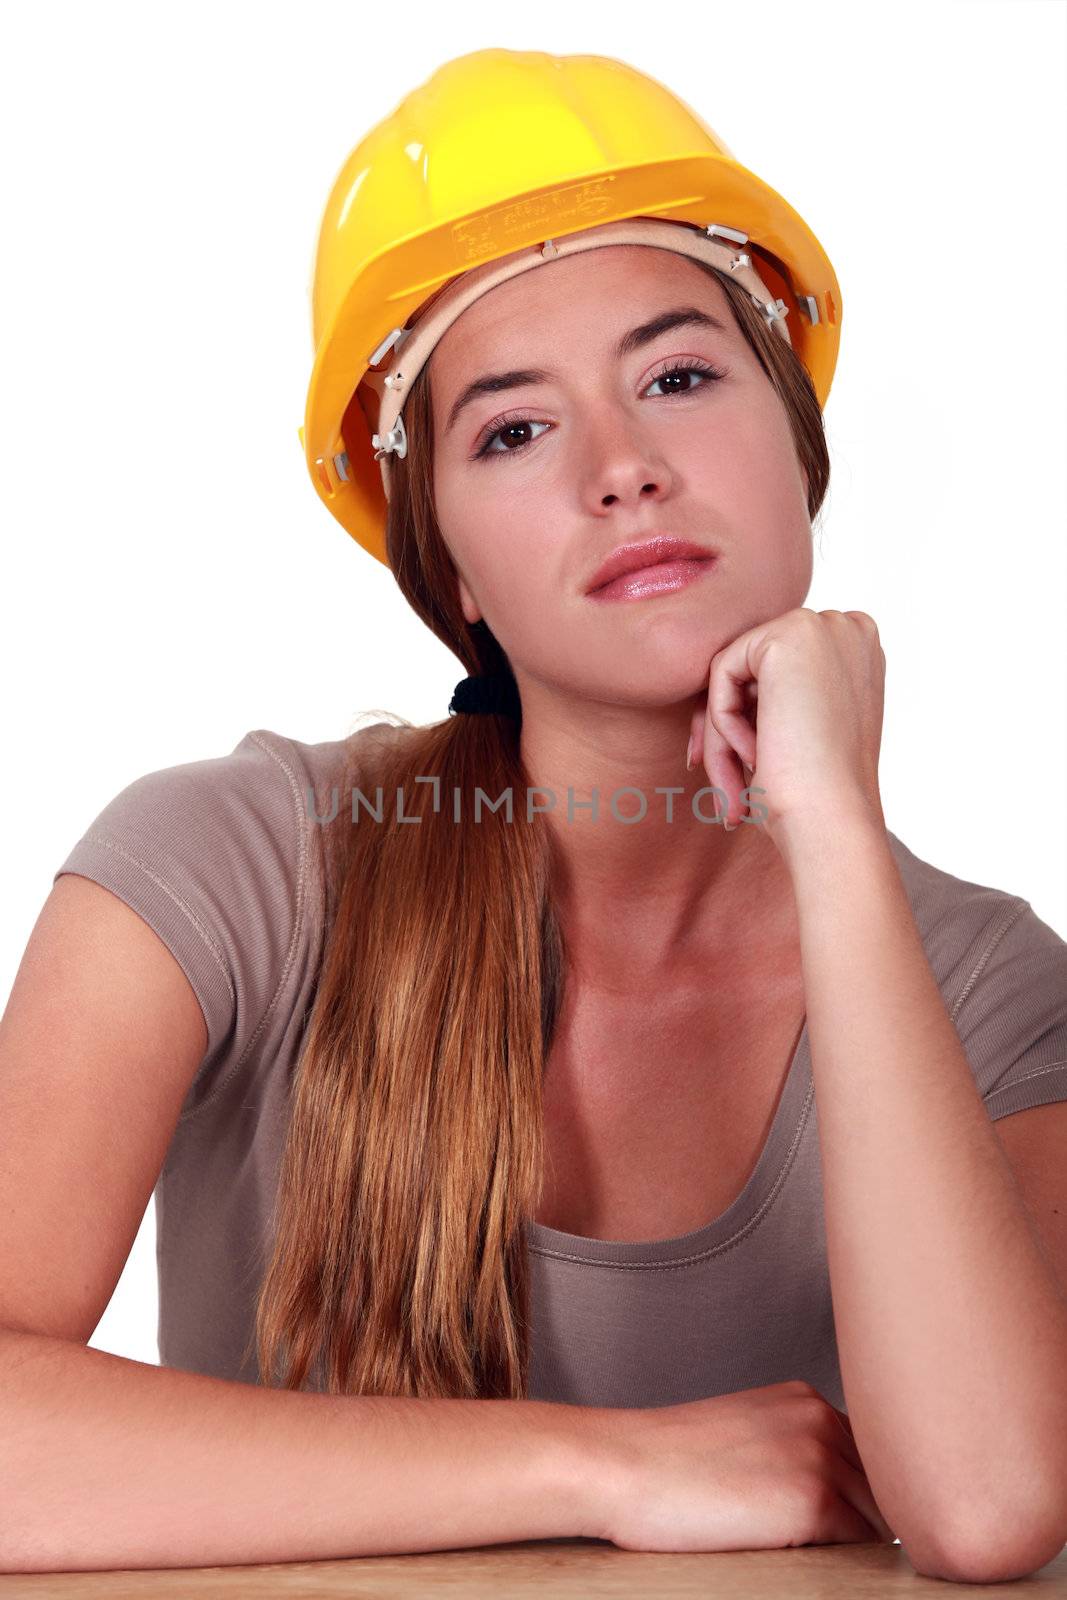 A pensive female manual worker.